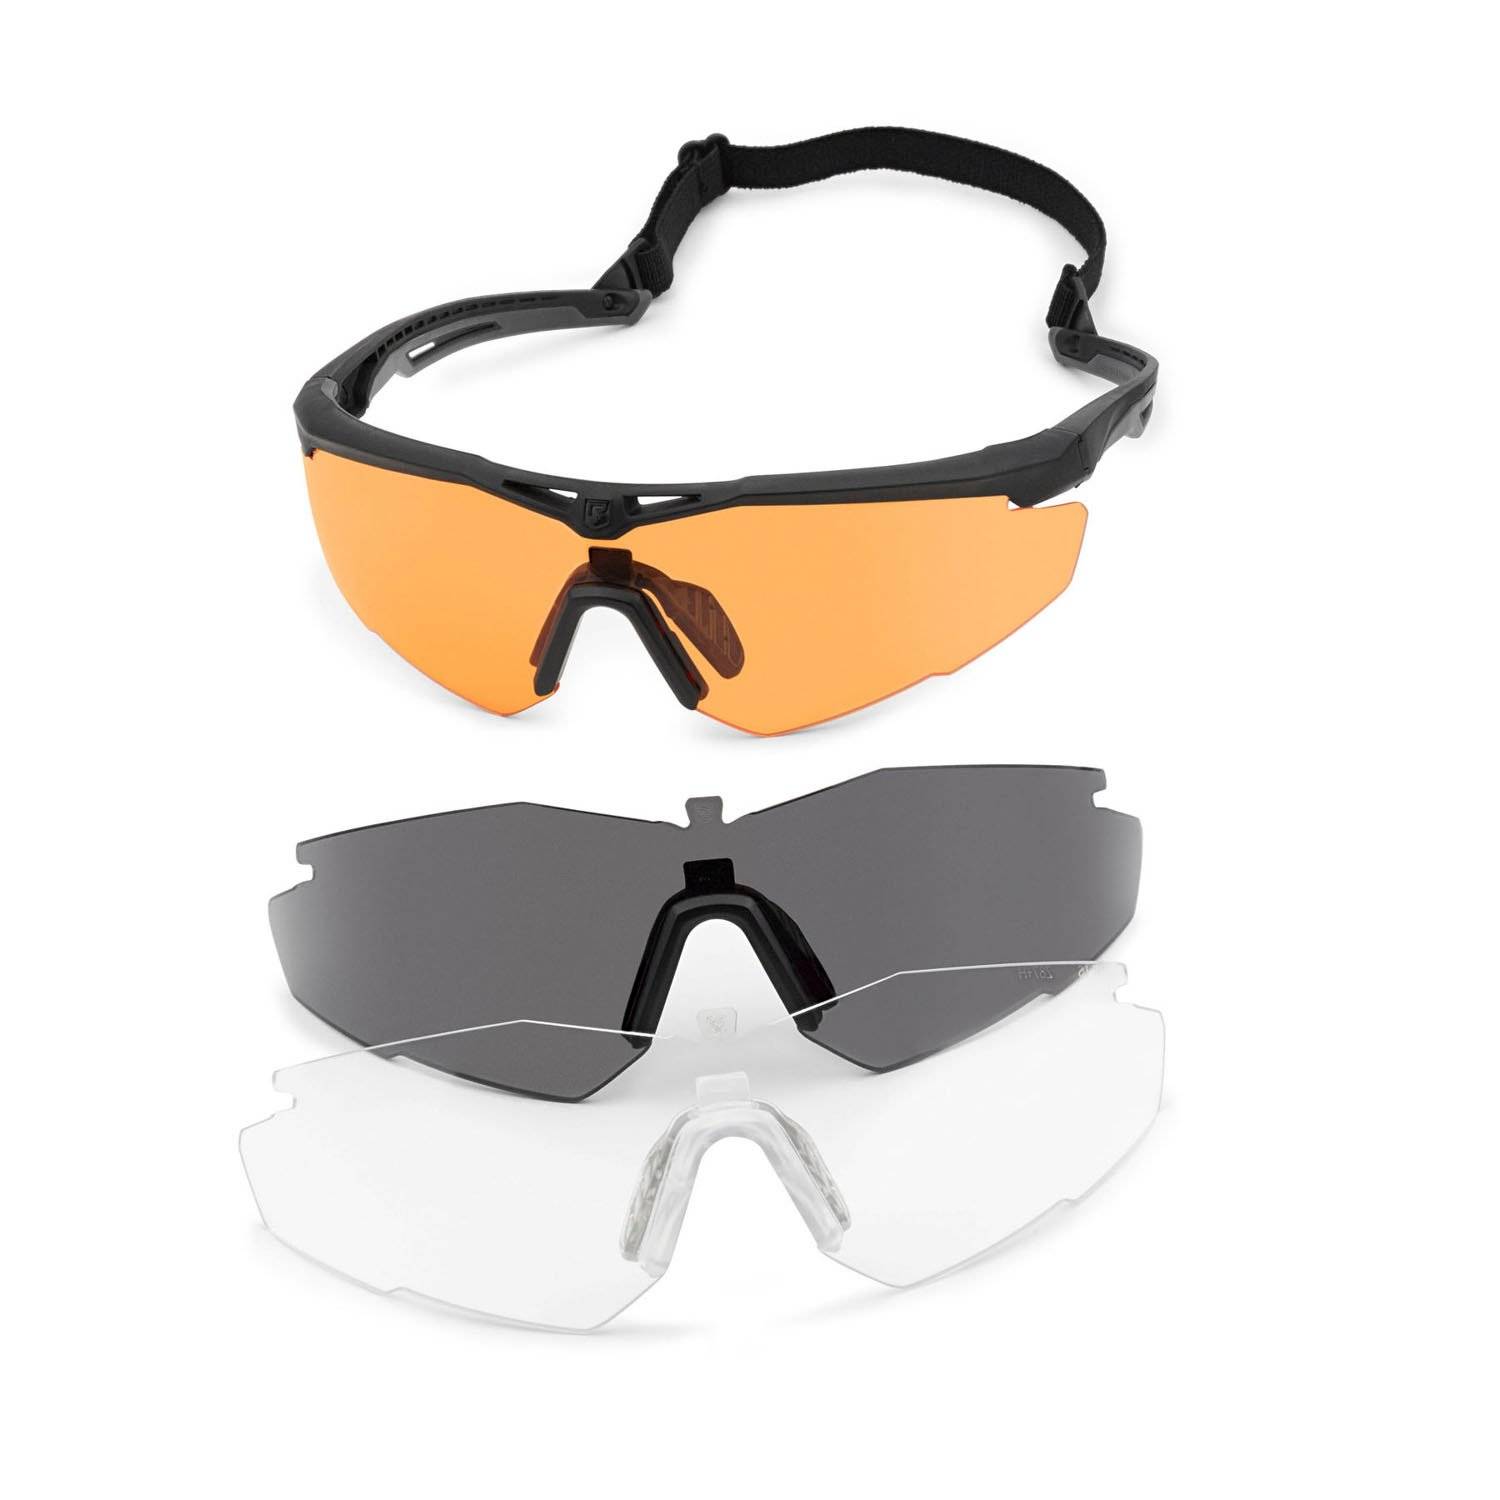 Revision StingerHawk Eyewear System - Deluxe Kit